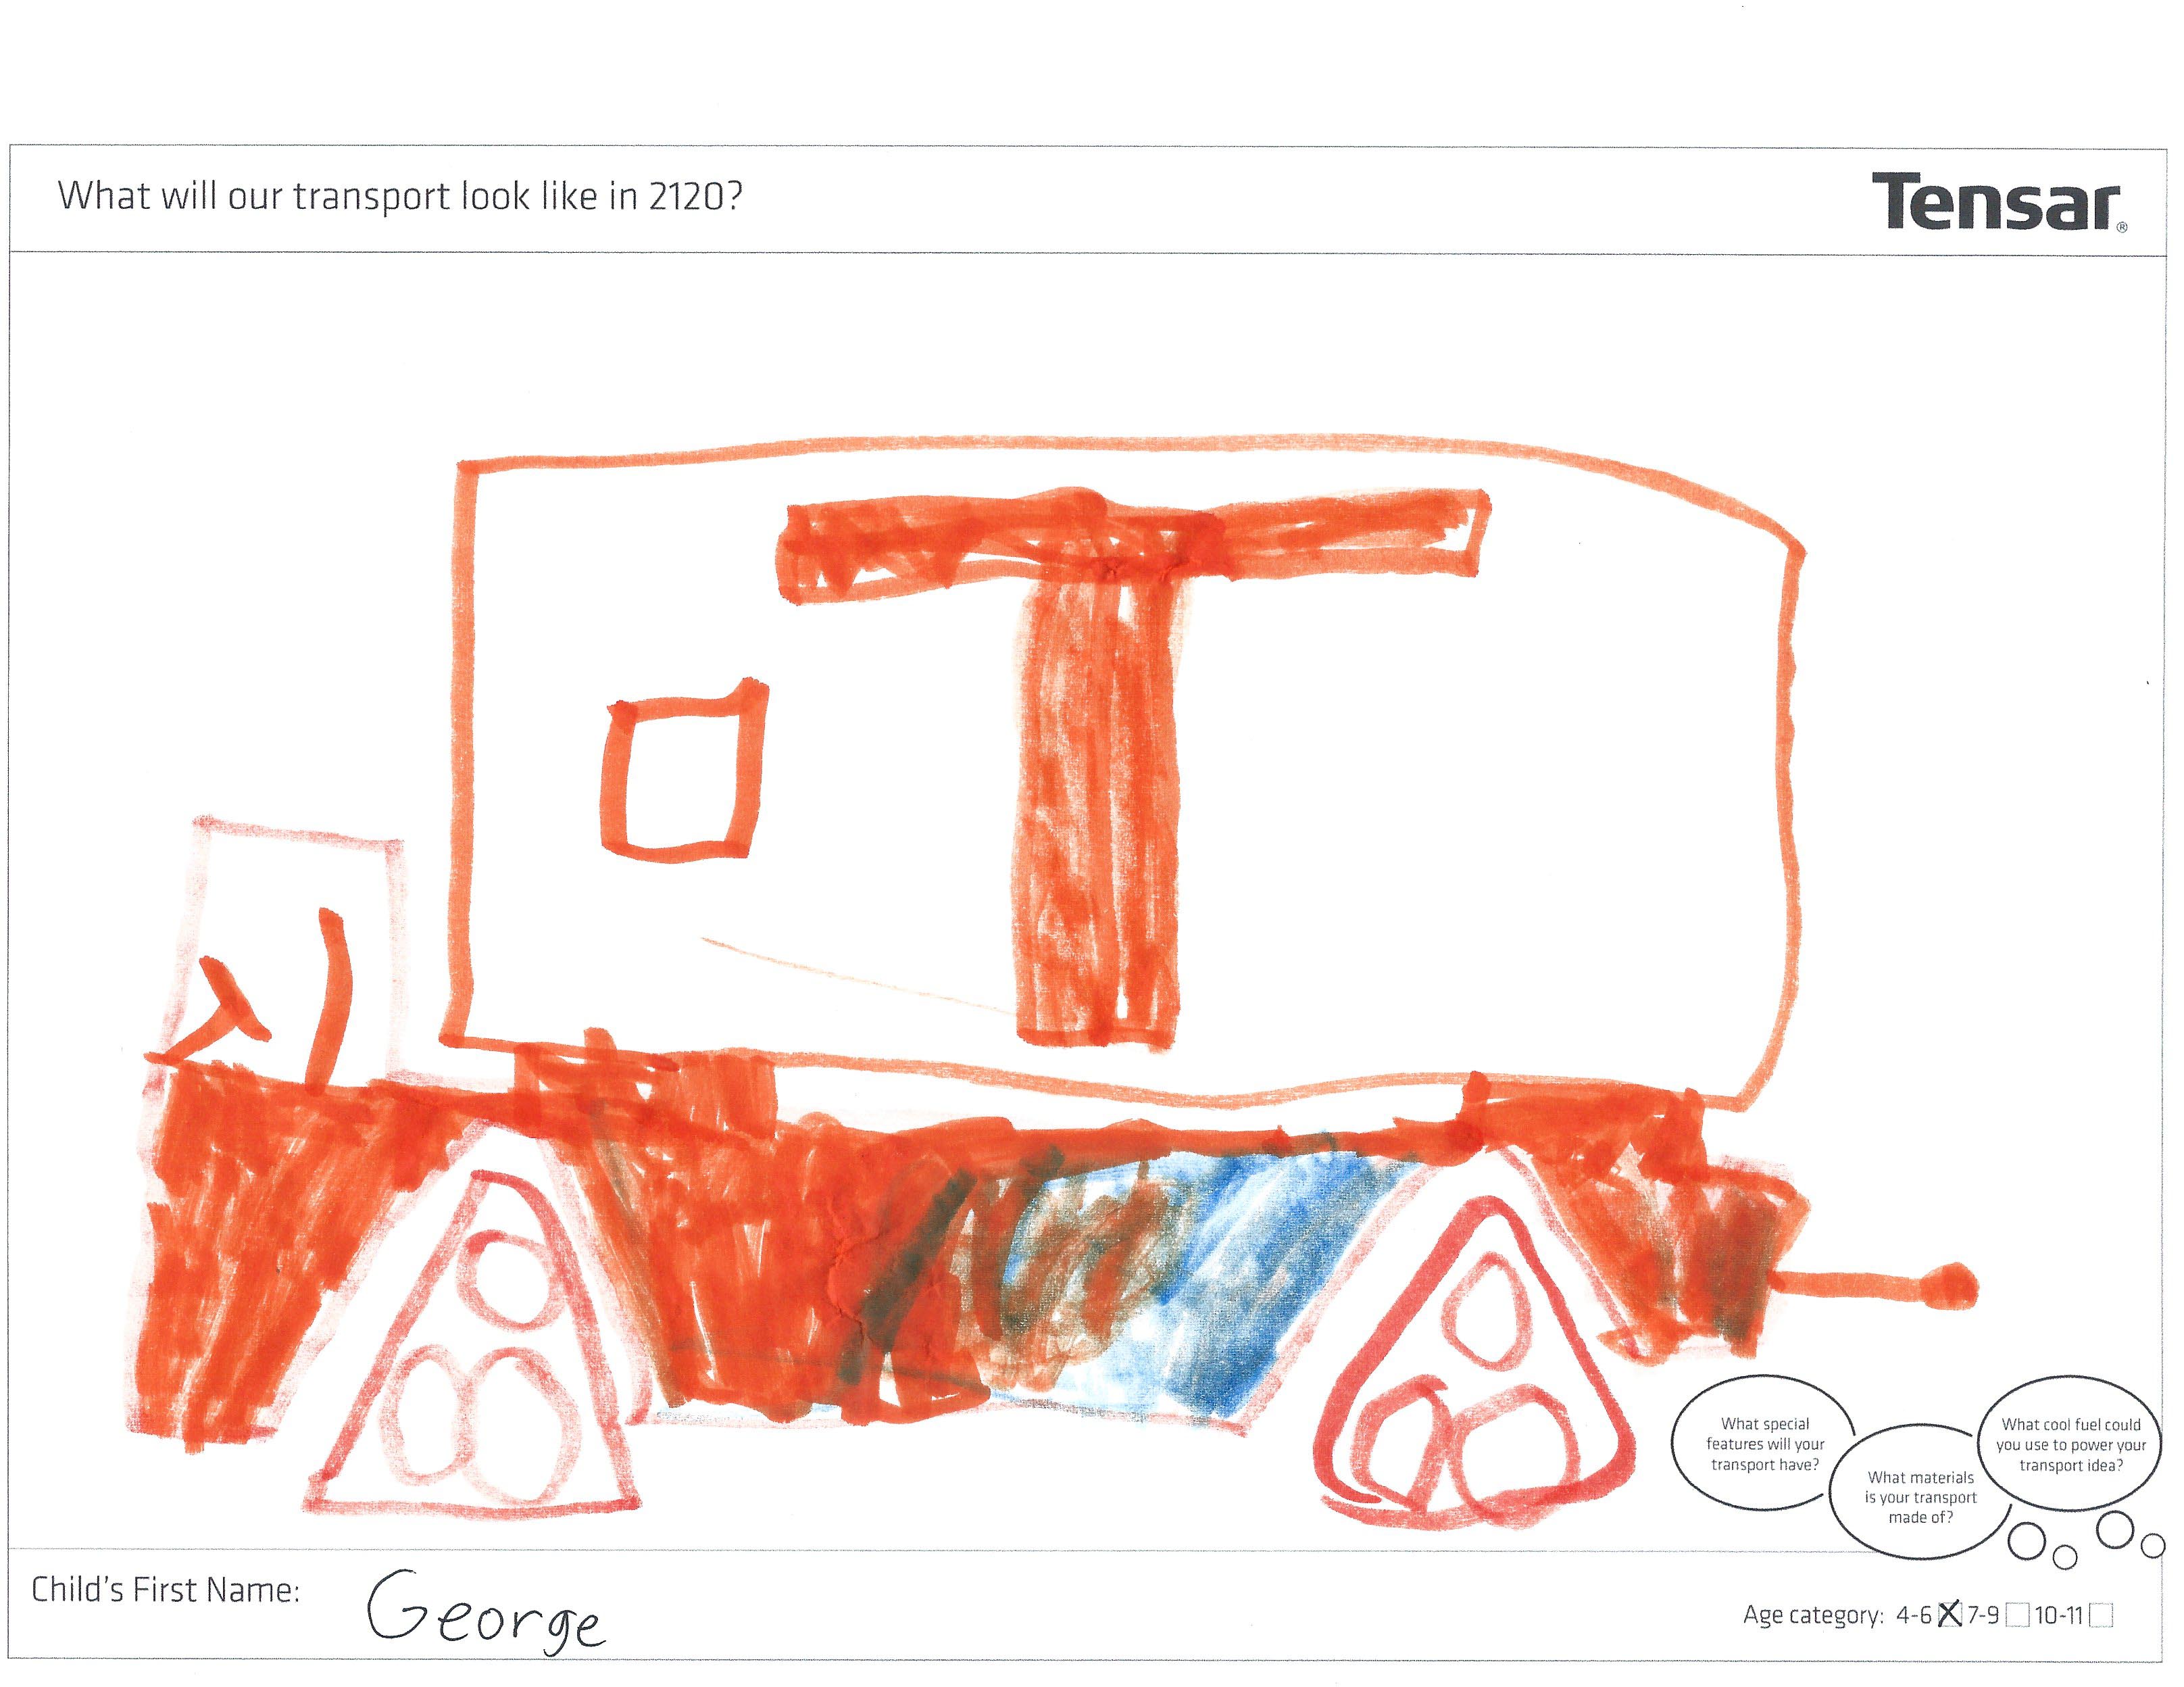 Tensar 2120 Transportation - George drawing